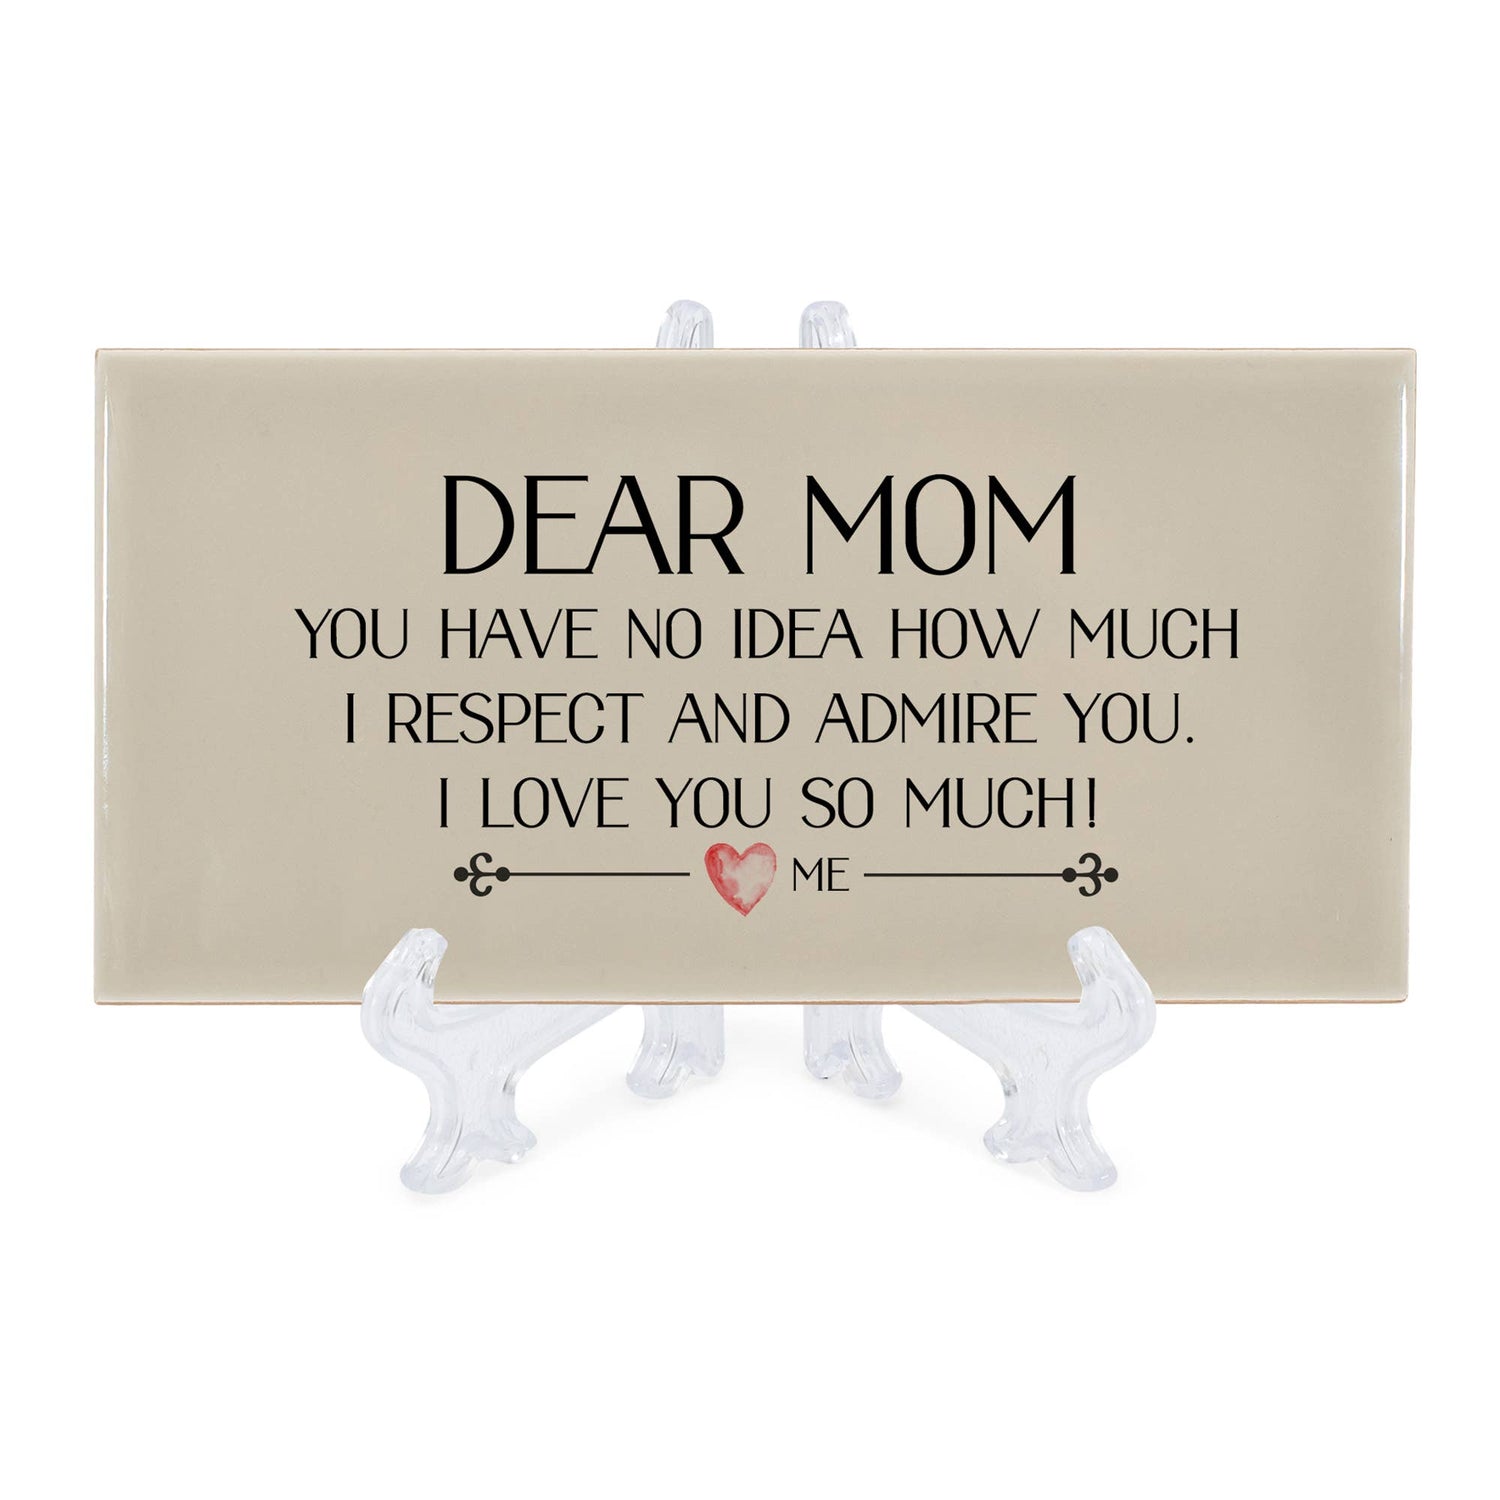 Dear Mom Shelf Sign | 2FruitBearers